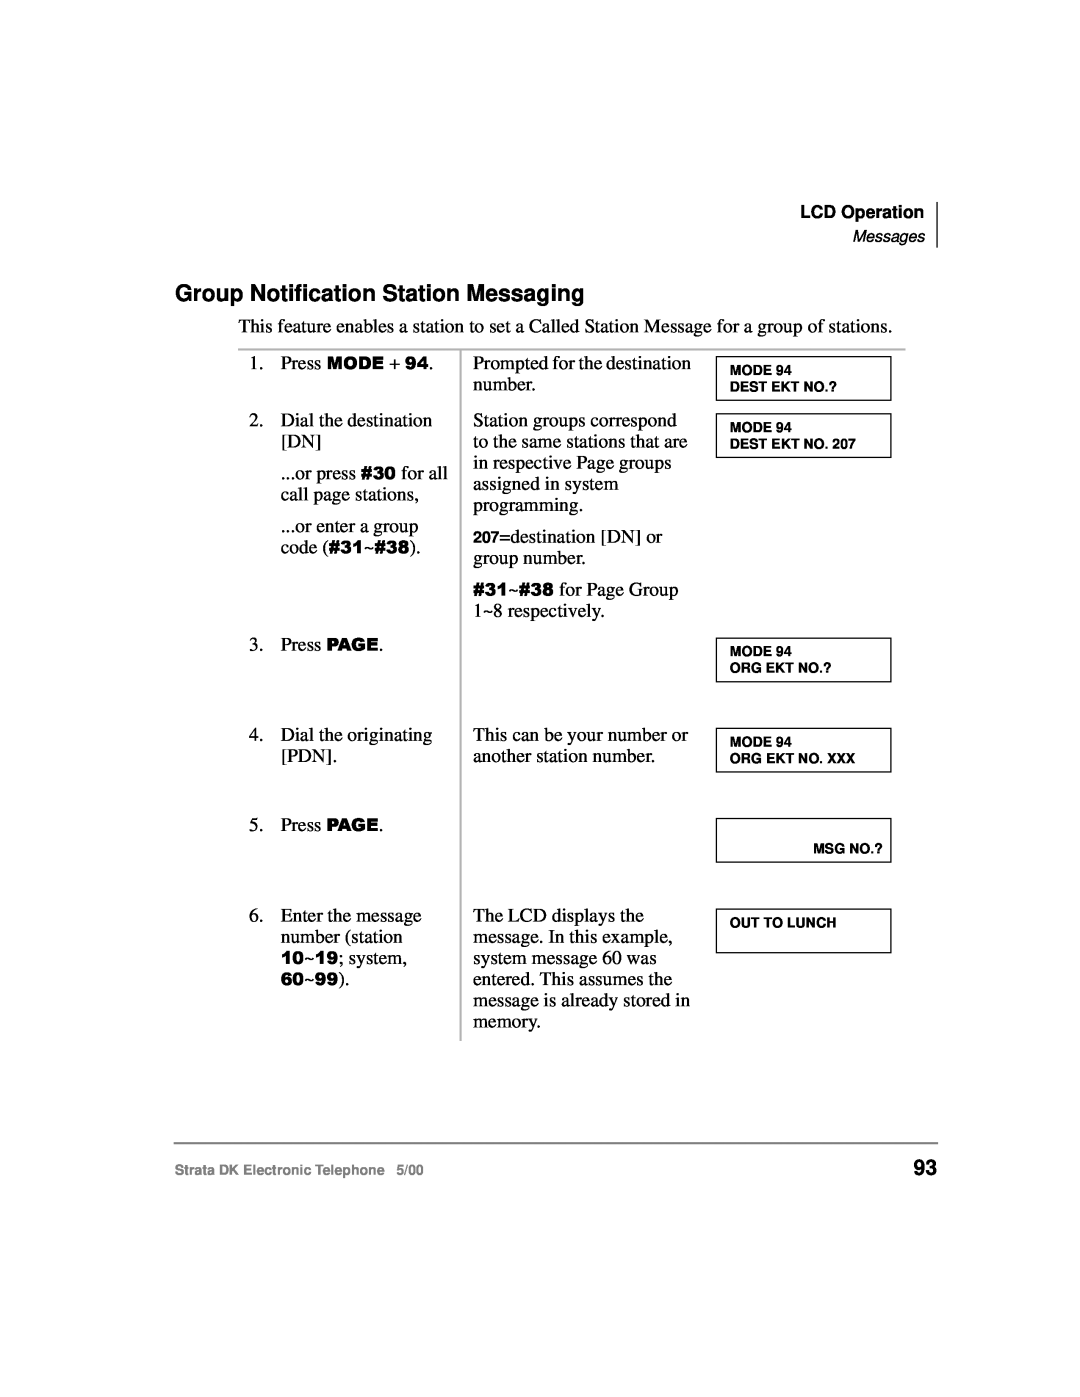 Toshiba Strata DK manual Group Notification Station Messaging 